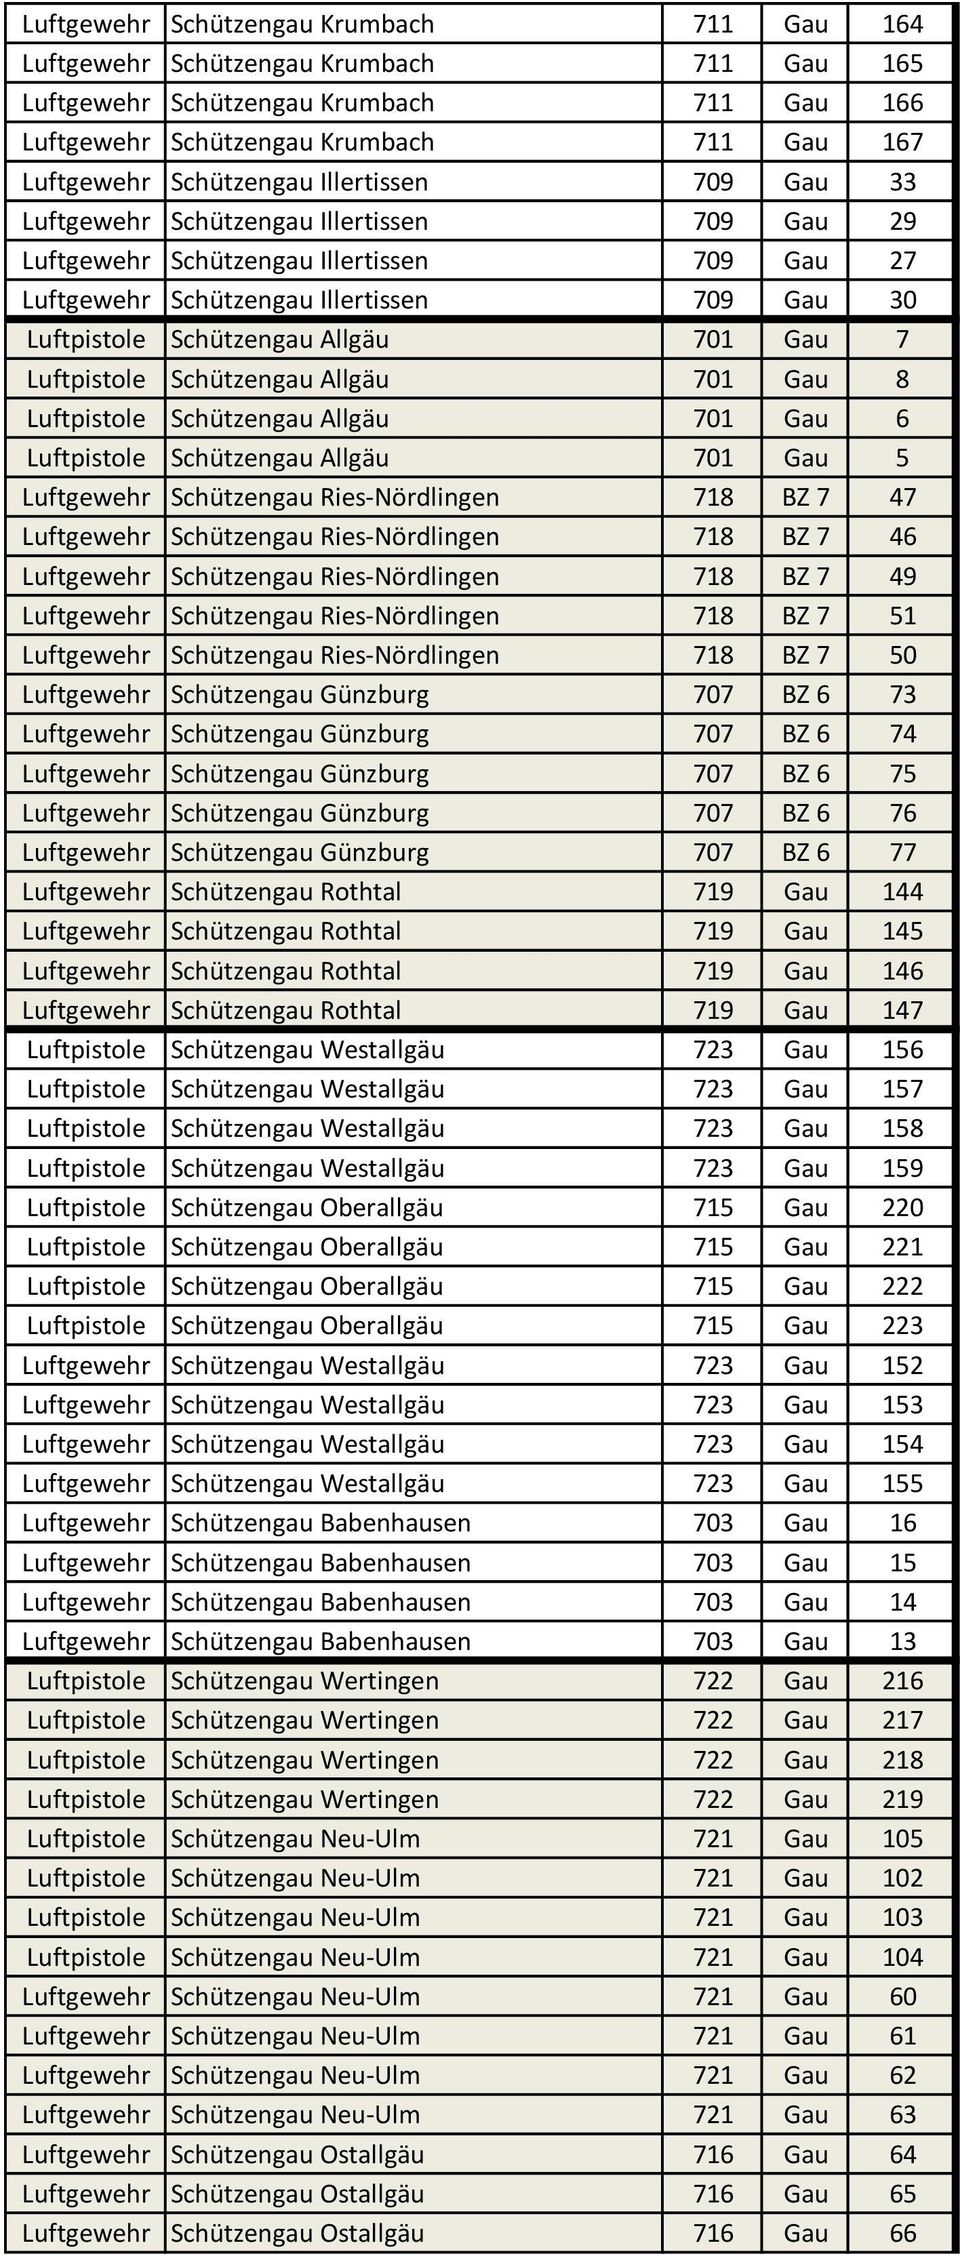 7 Luftpistole Schützengau Allgäu 701 Gau 8 Luftpistole Schützengau Allgäu 701 Gau 6 Luftpistole Schützengau Allgäu 701 Gau 5 Luftgewehr Schützengau Ries-Nördlingen 718 BZ 7 47 Luftgewehr Schützengau